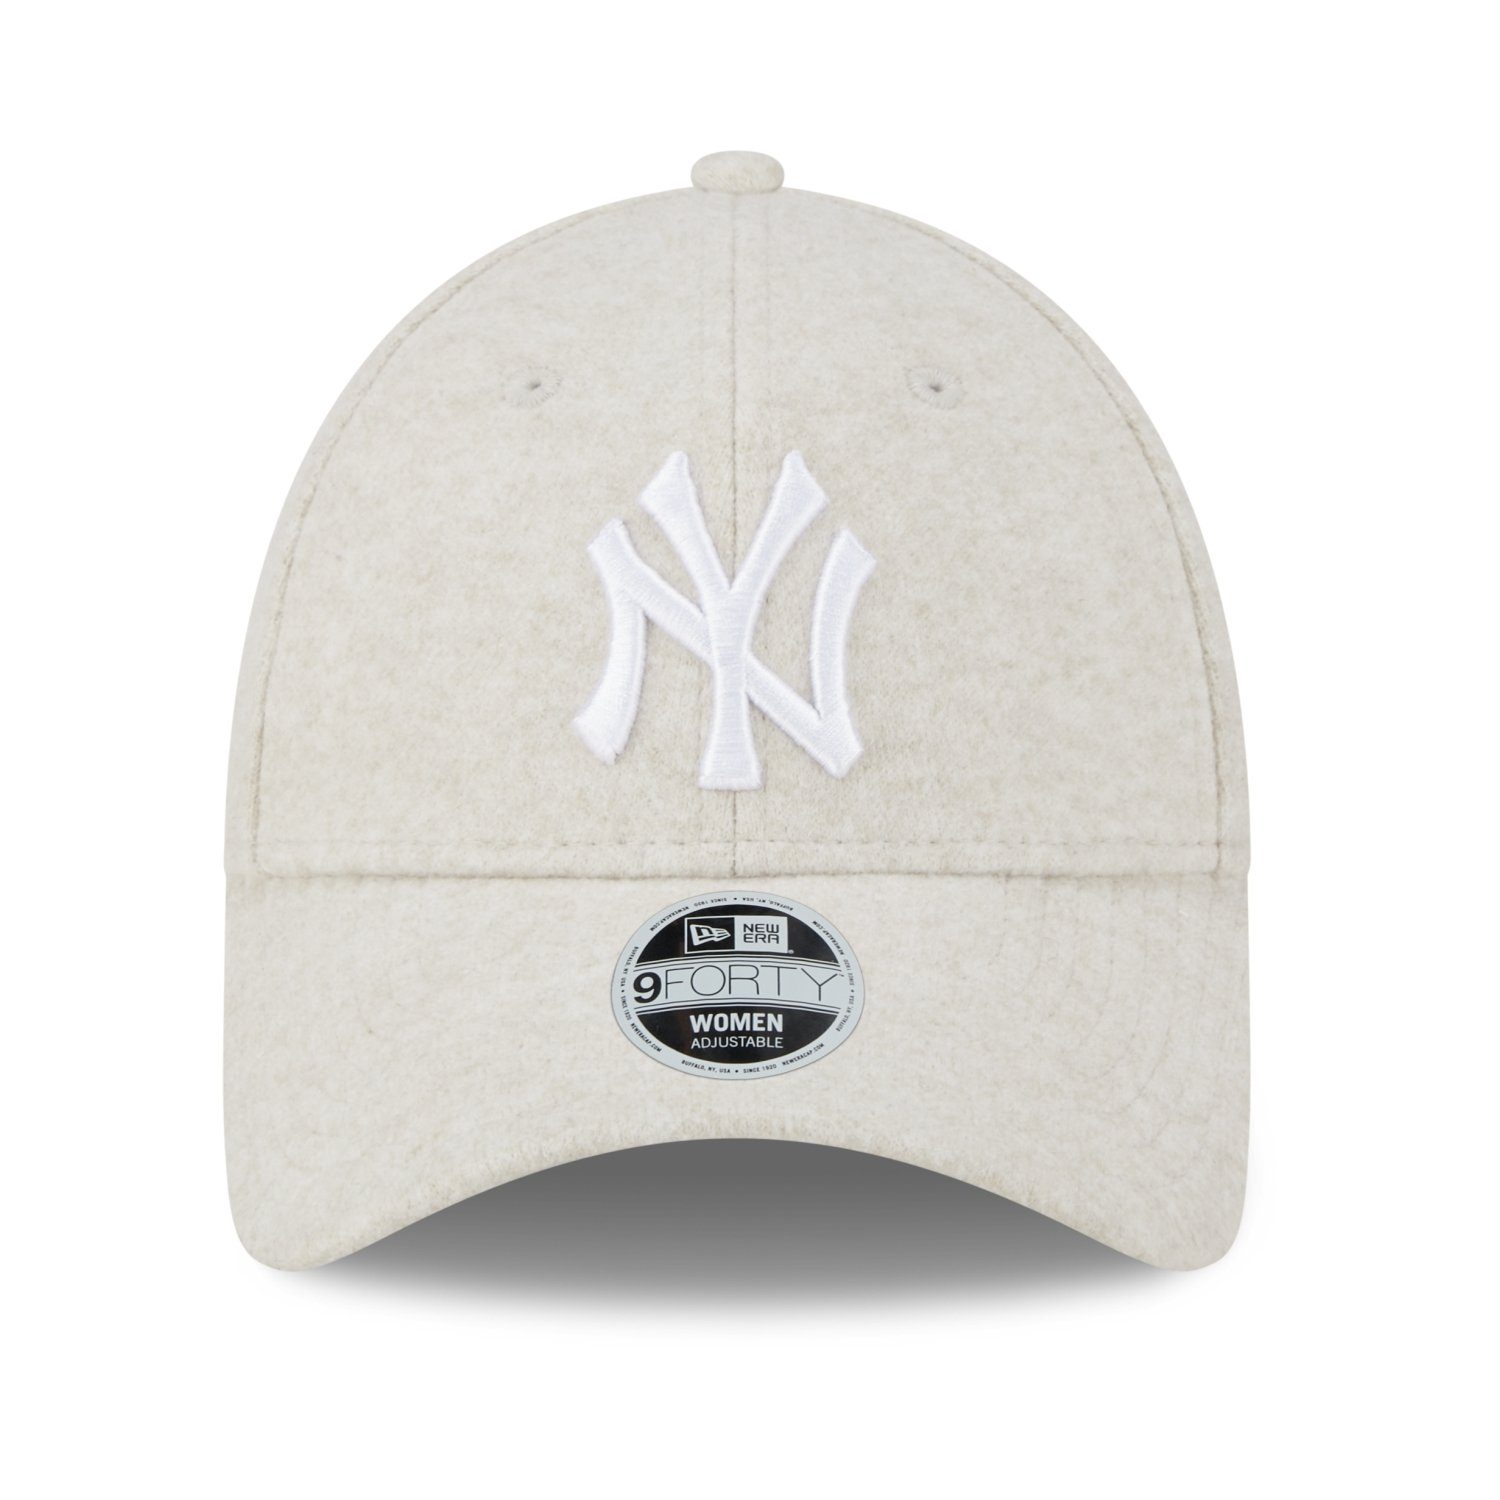 New Era Baseball York Yankees 9Forty New Cap